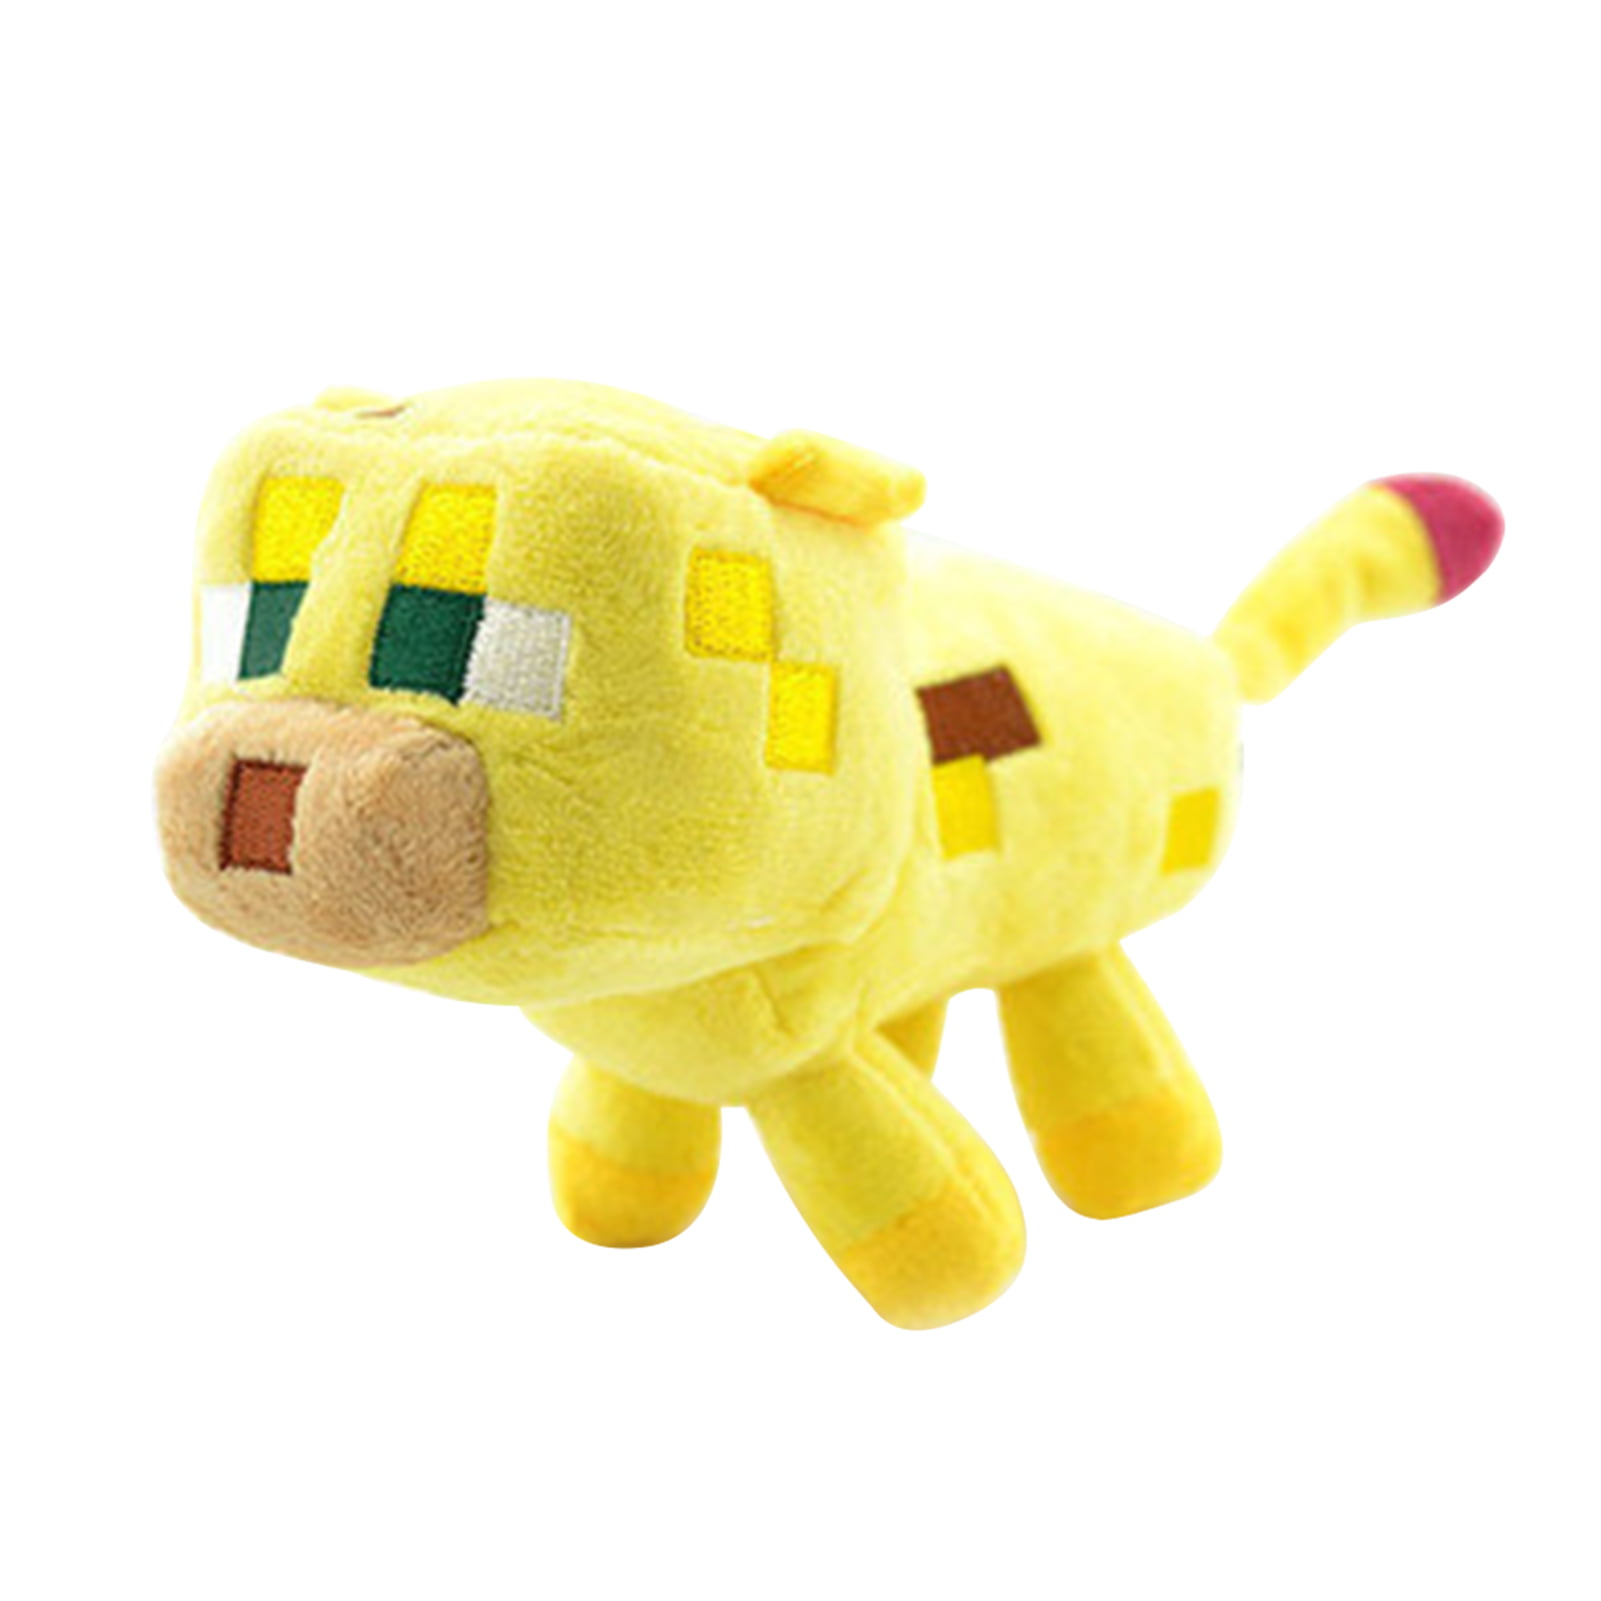 Minecraft Animal Plush Toys Stuffed Animals Soft Plushies For Child Kids Gifts 